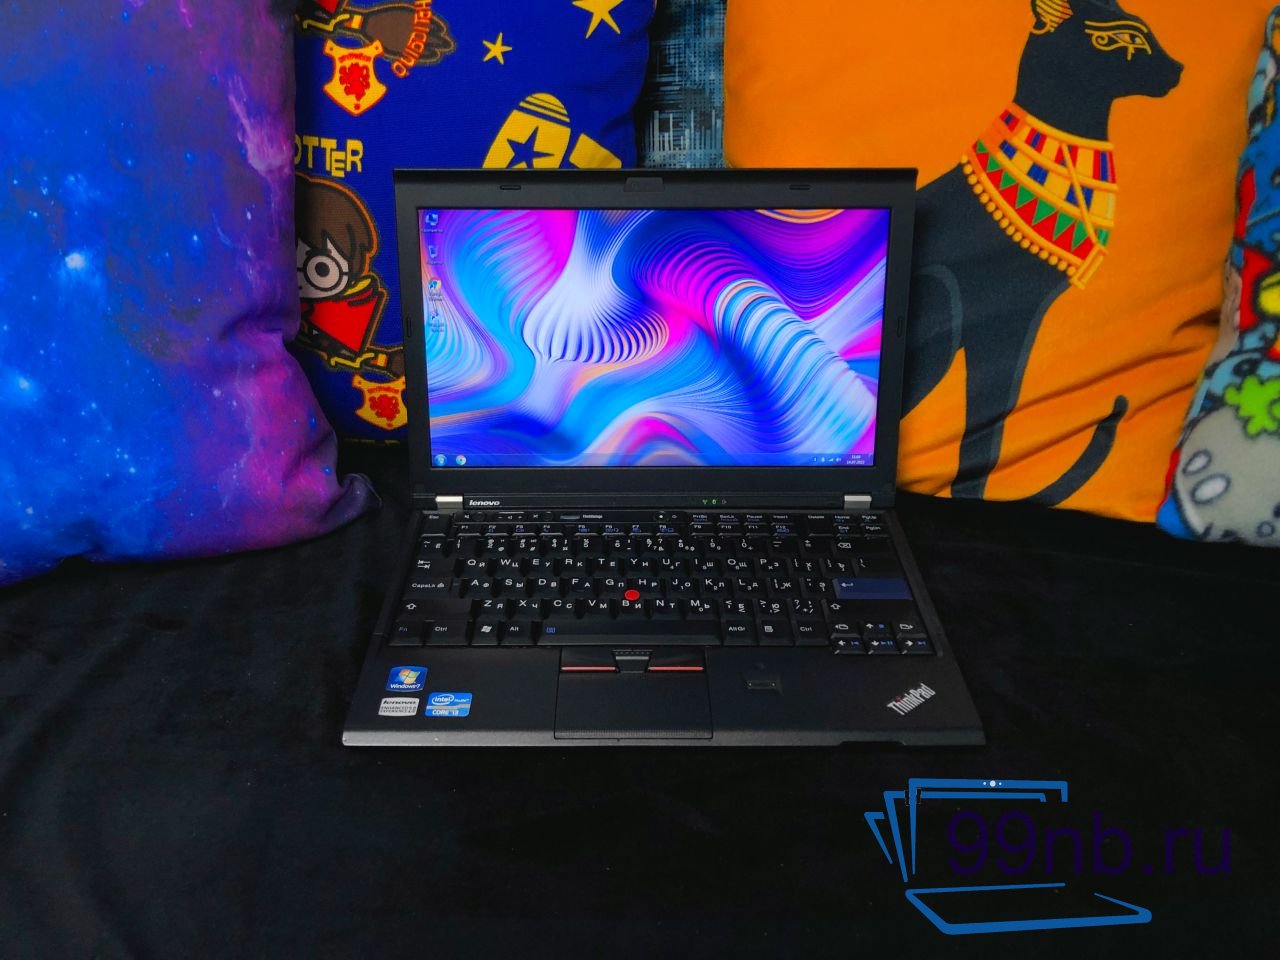  Компактный ноутбук Lenovo ThinkPad Intel Core+SSD